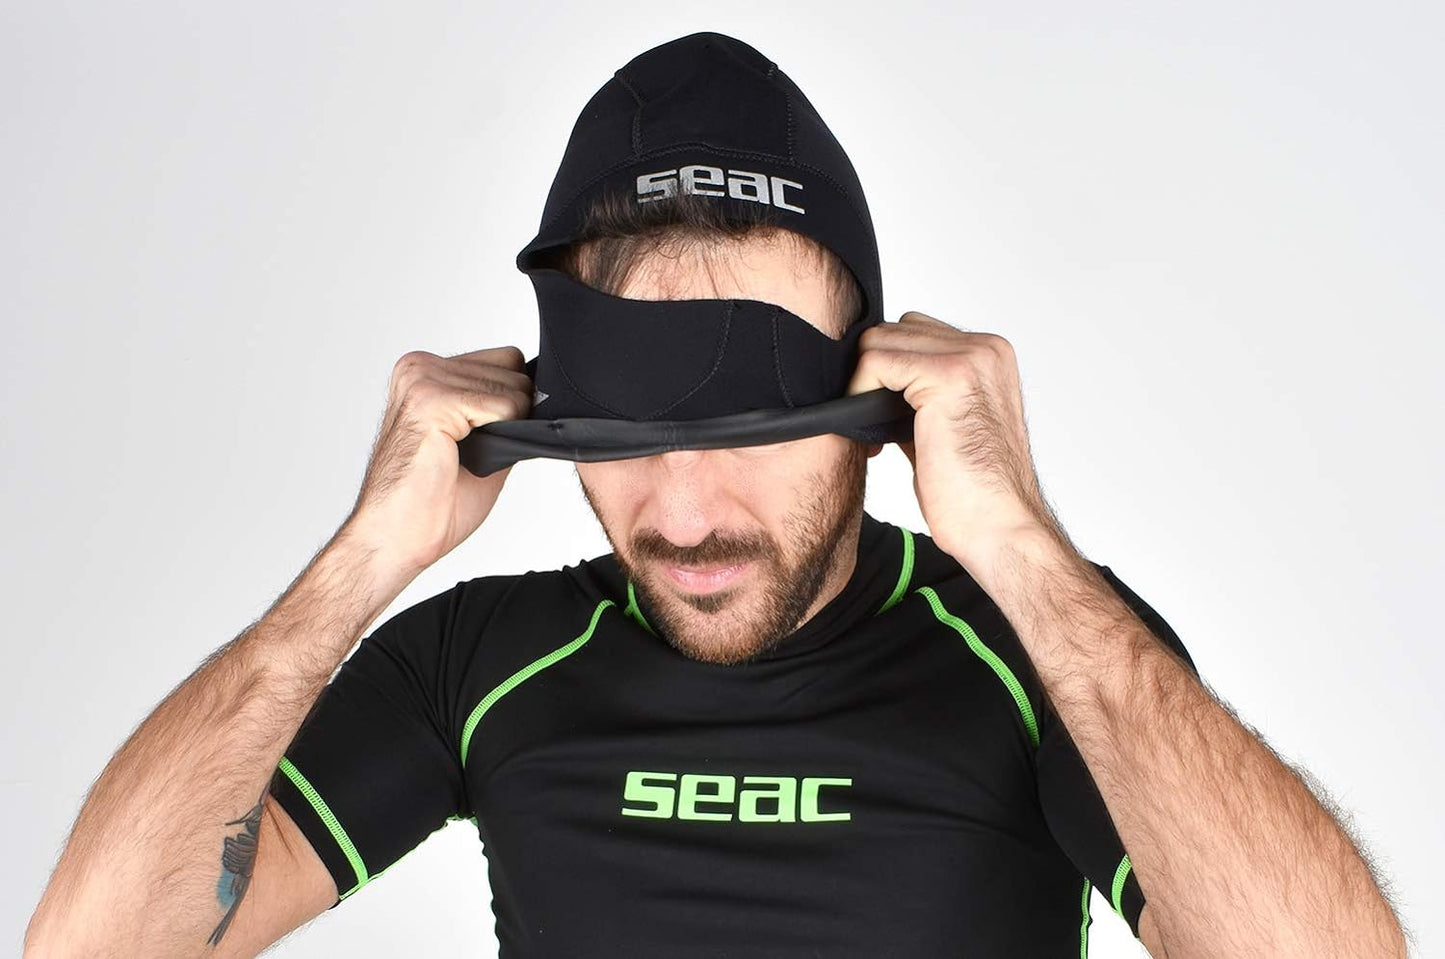 Seac 标准型 Ultraspan 氯丁橡胶潜水衣兜帽